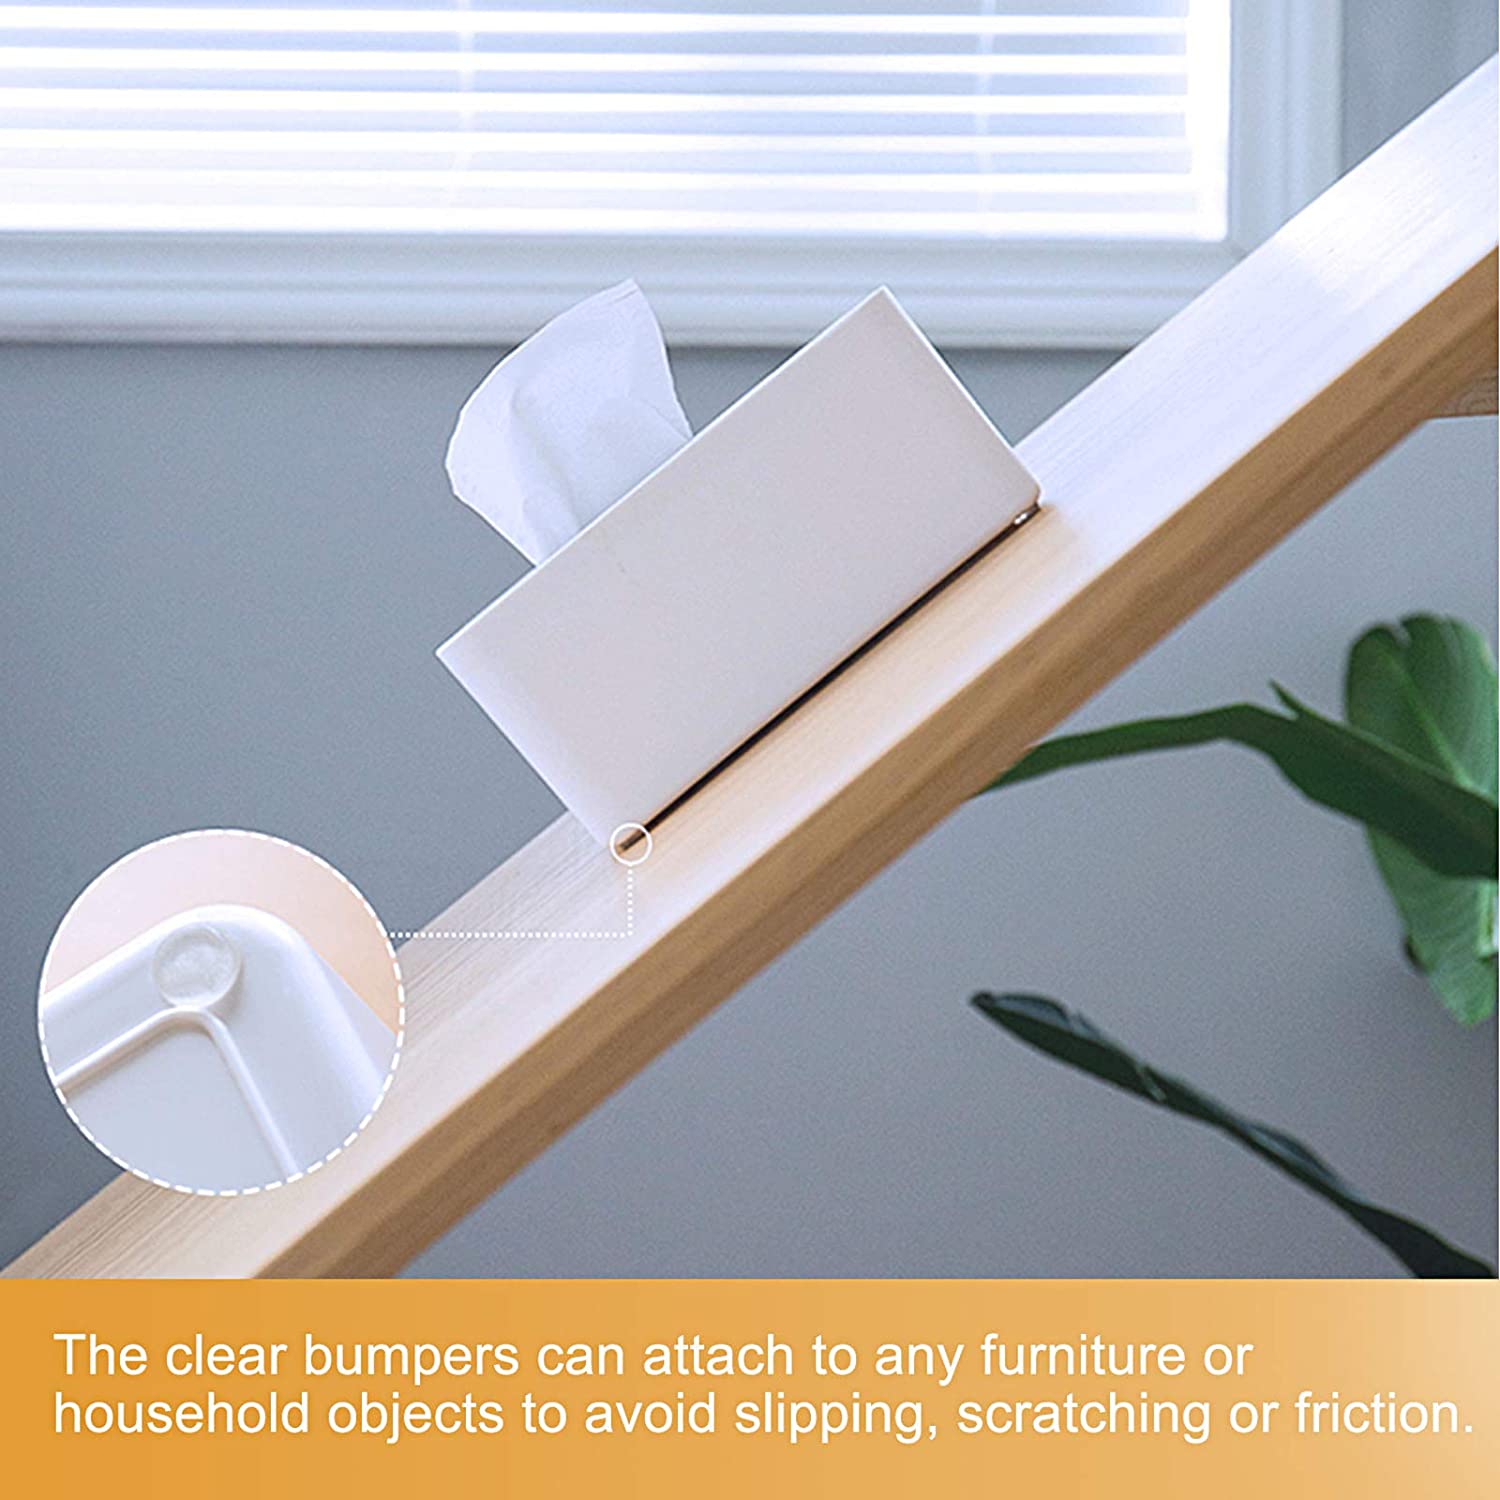 Silicone Bumper Pads For Furniture furniture pads- #Royalkart#bumper pads